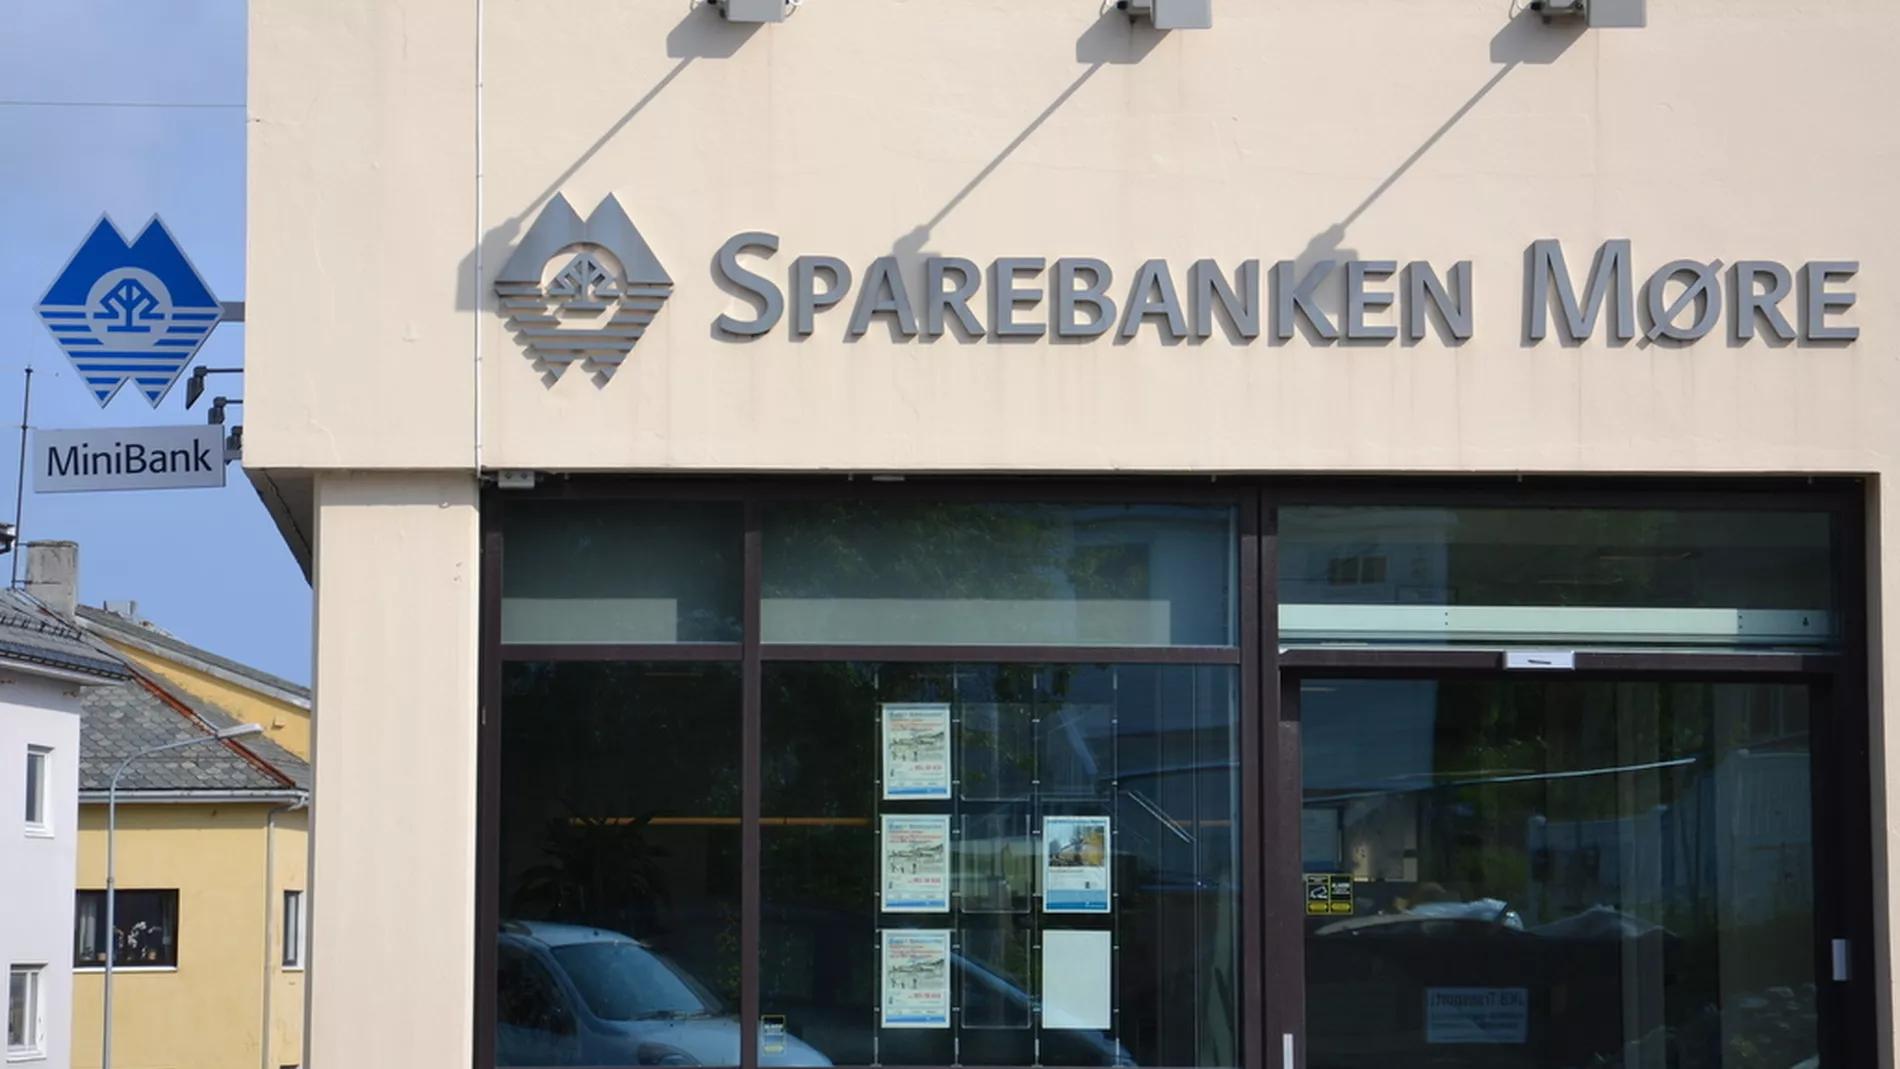 Sparebanken Møre fasade